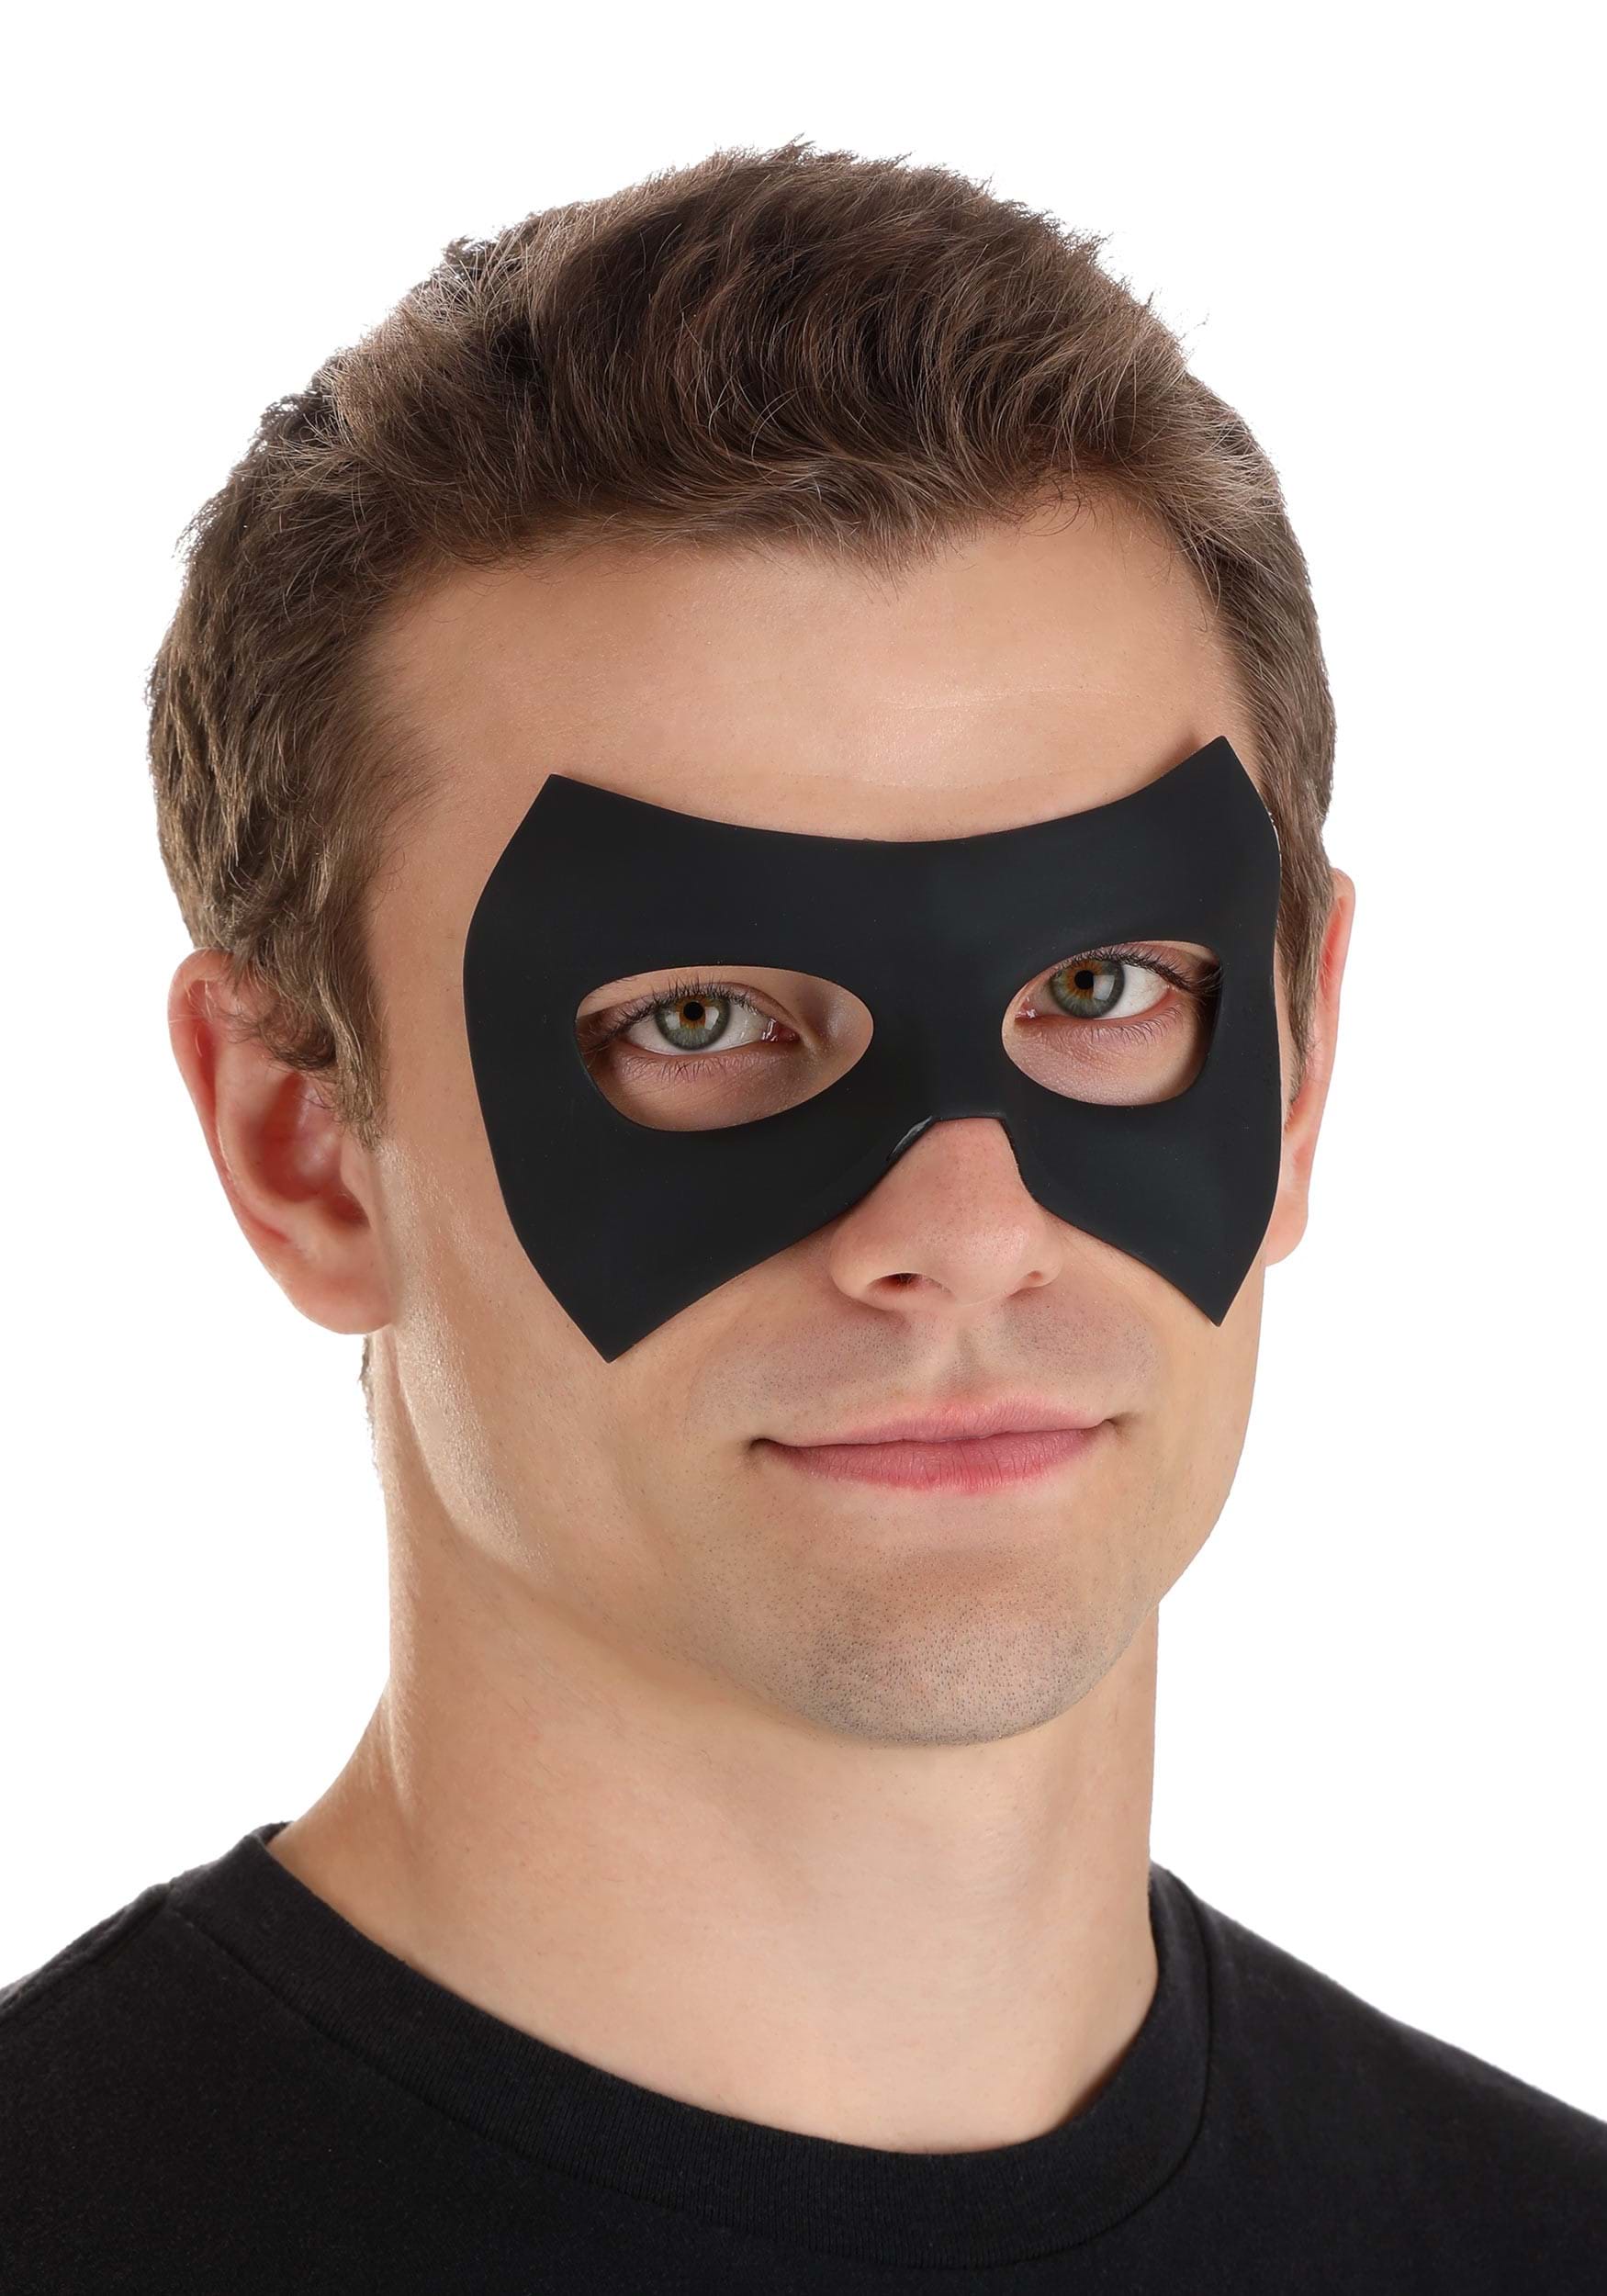 Manic Superhero/ The Mask Adult Costume. 